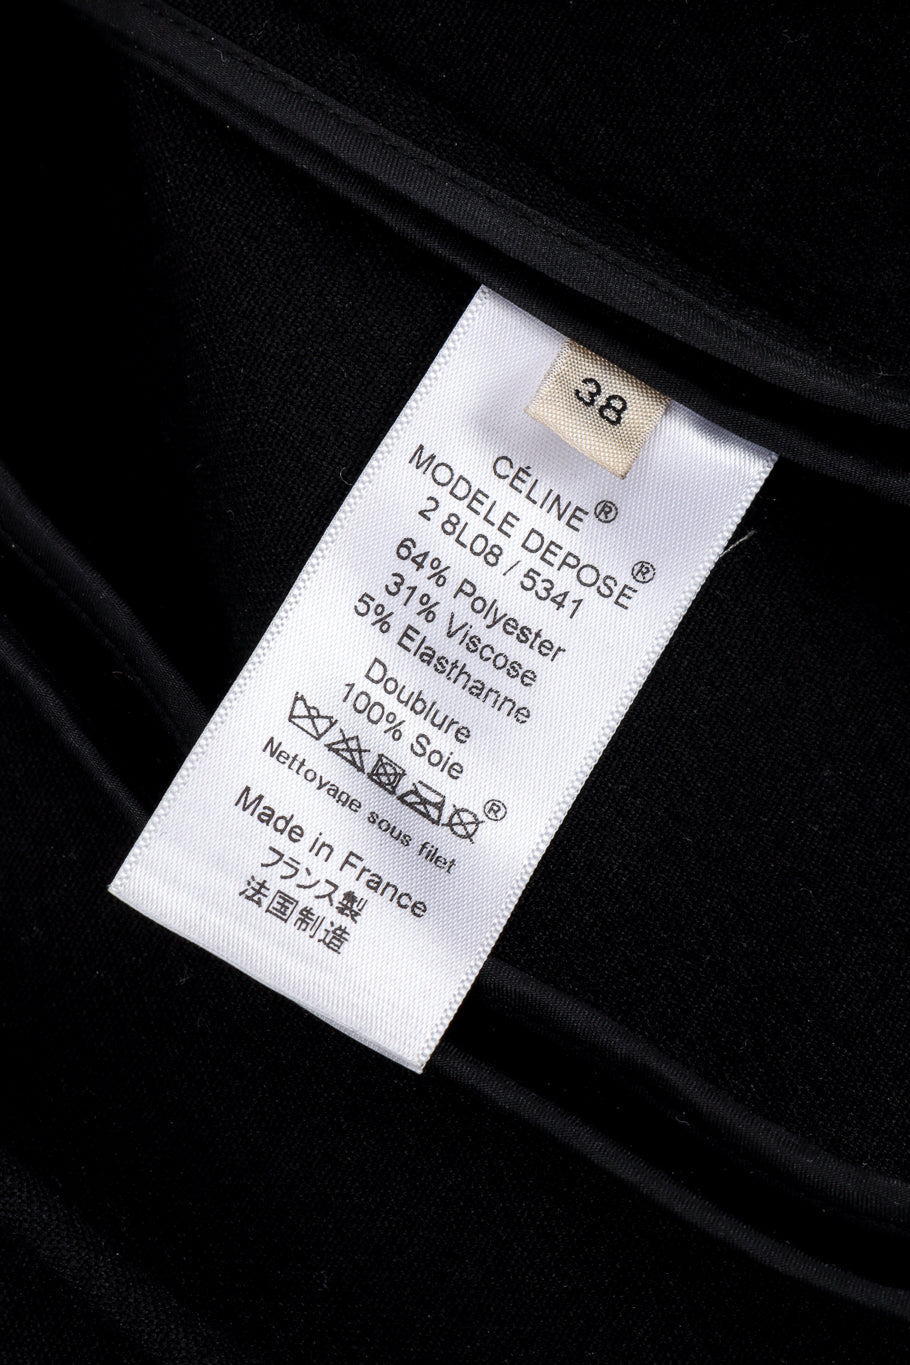 2014 S/S Eyelet Coat by Céline fabric tag @recessla